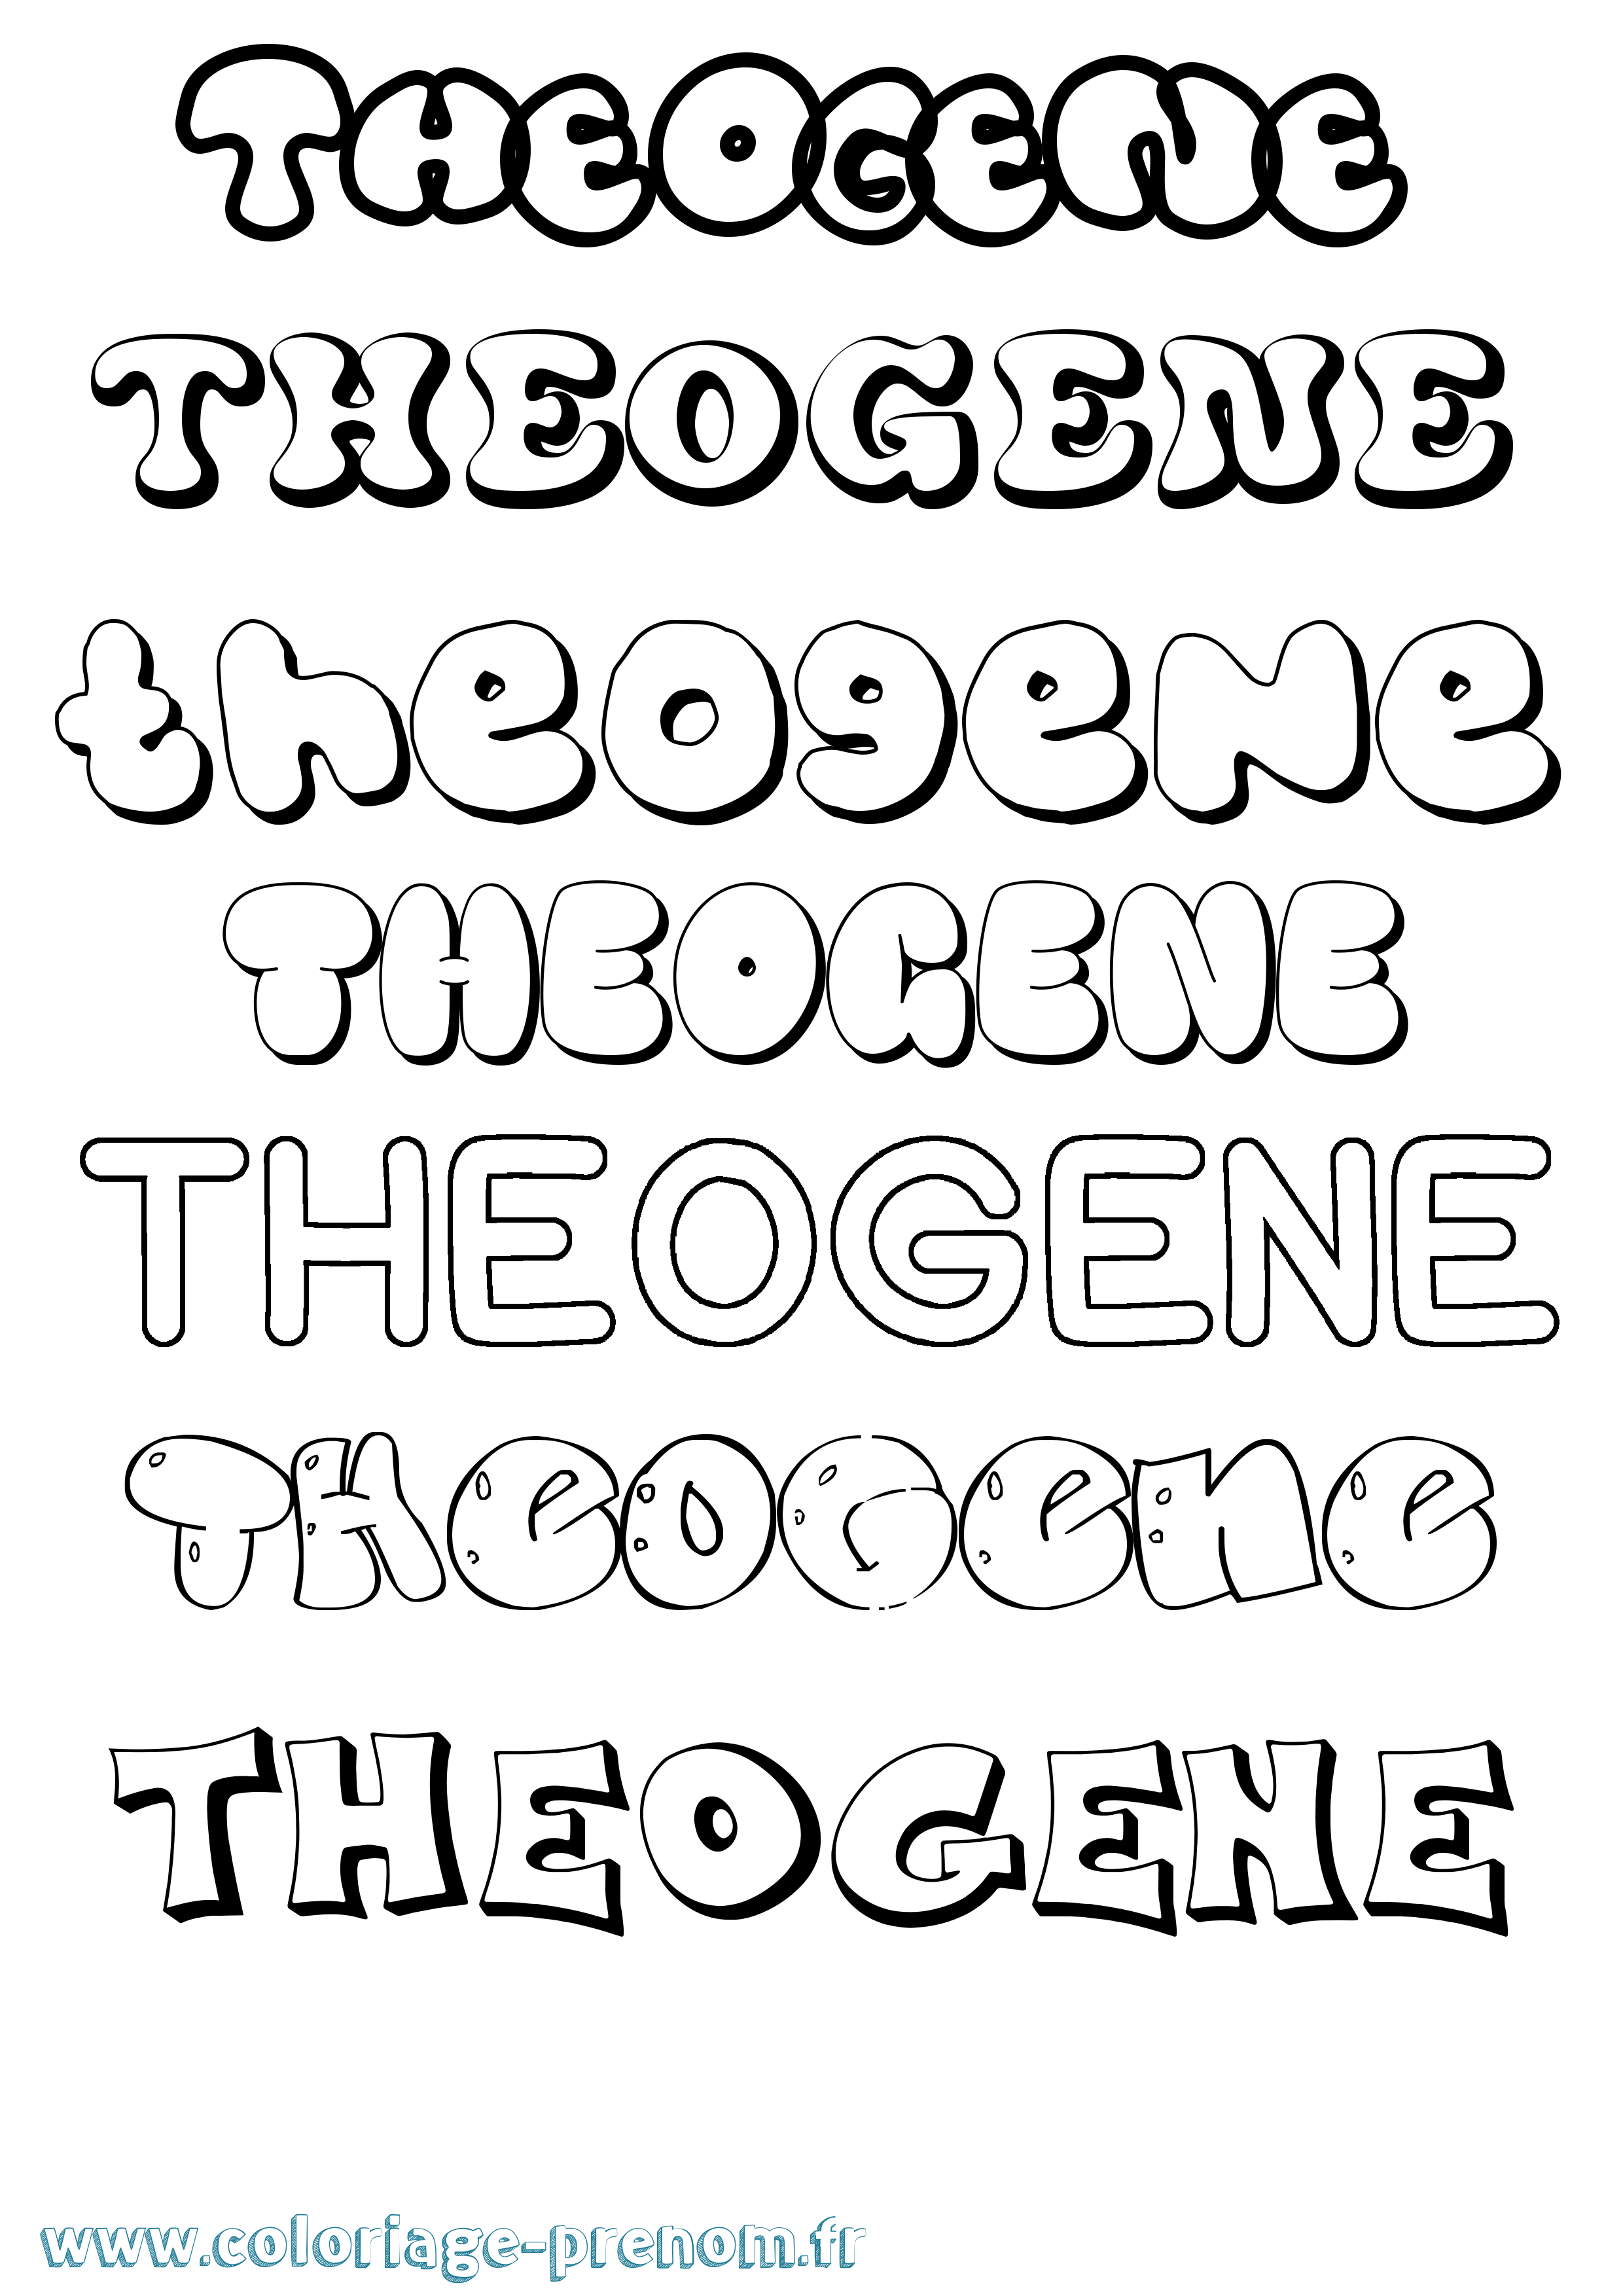 Coloriage prénom Theogene Bubble